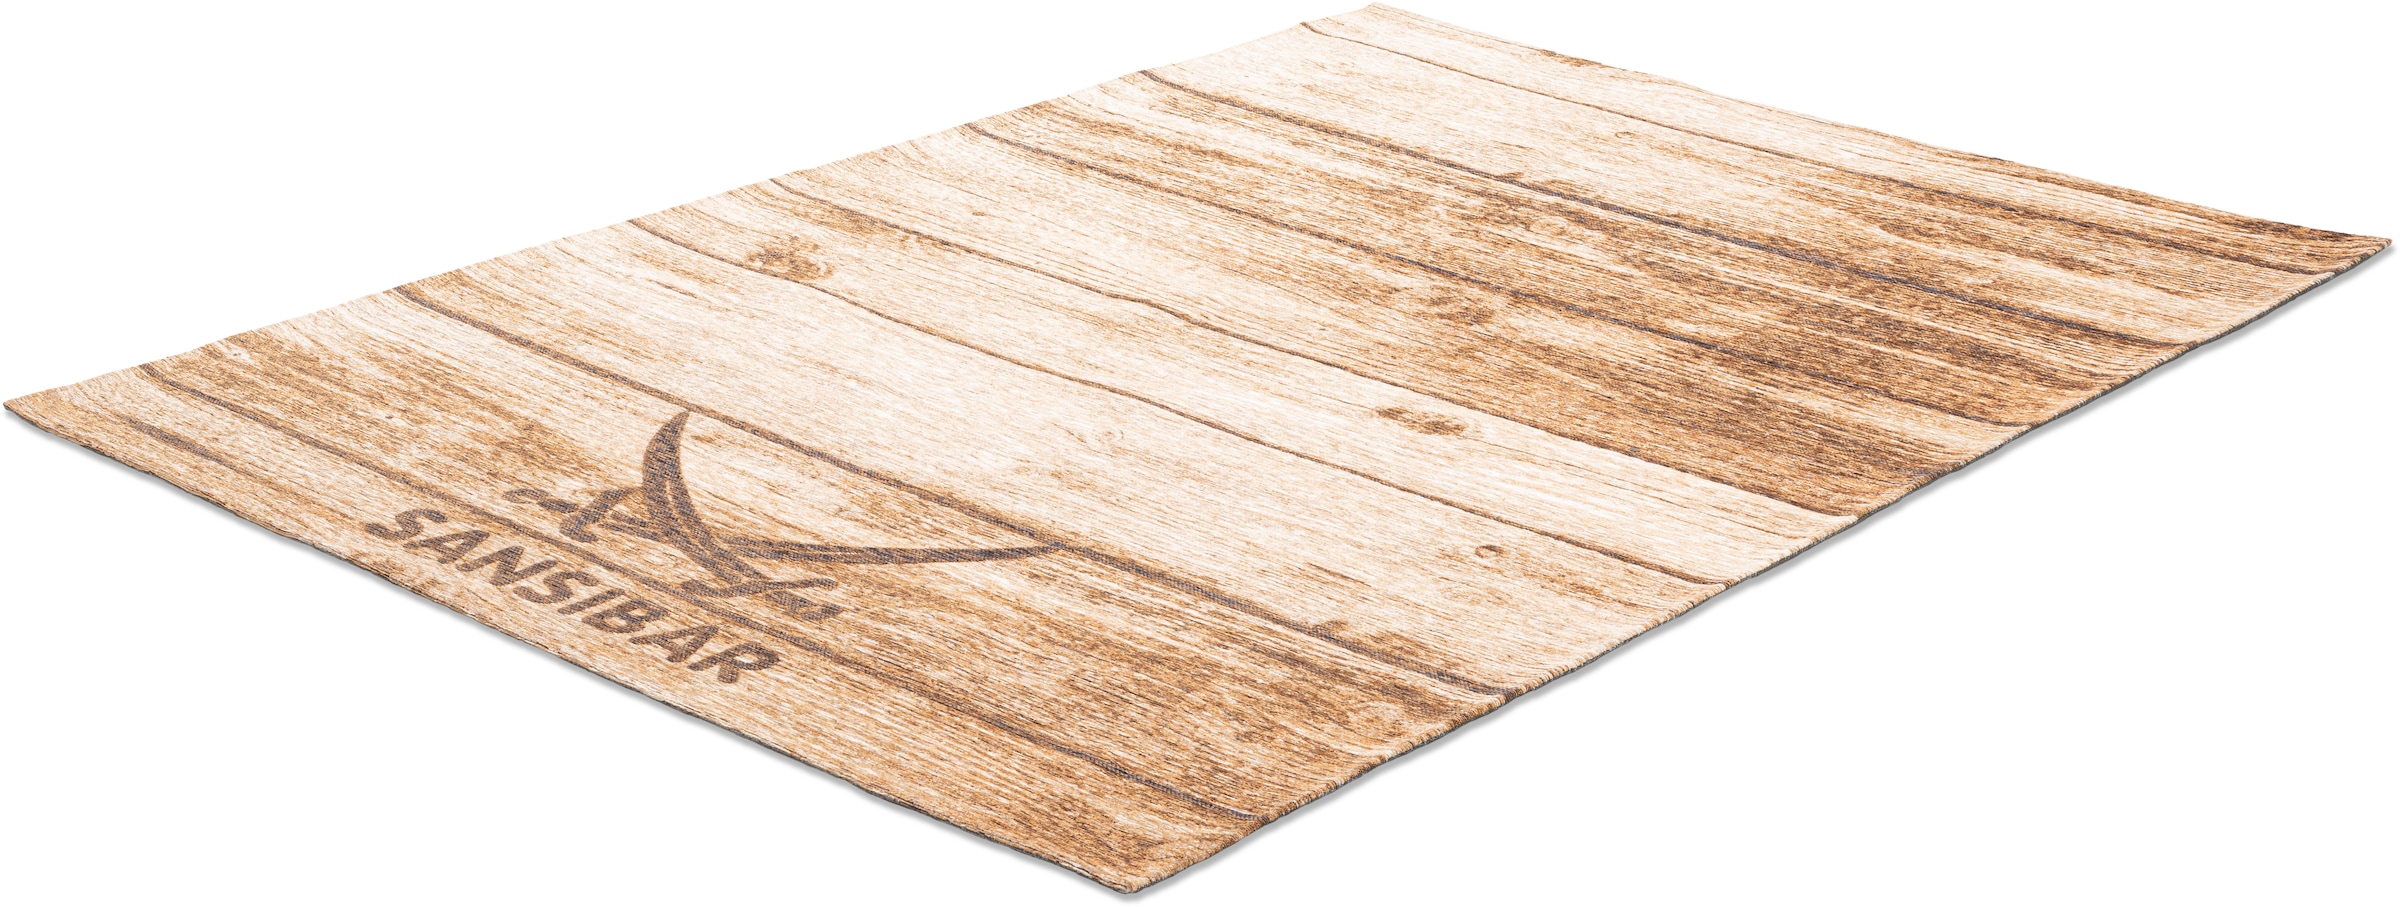 Sansibar Teppich »Keitum 009«, rechteckig, Flachgewebe, Motiv Holzdielen &  gekreuzte Säbel Trouver sur